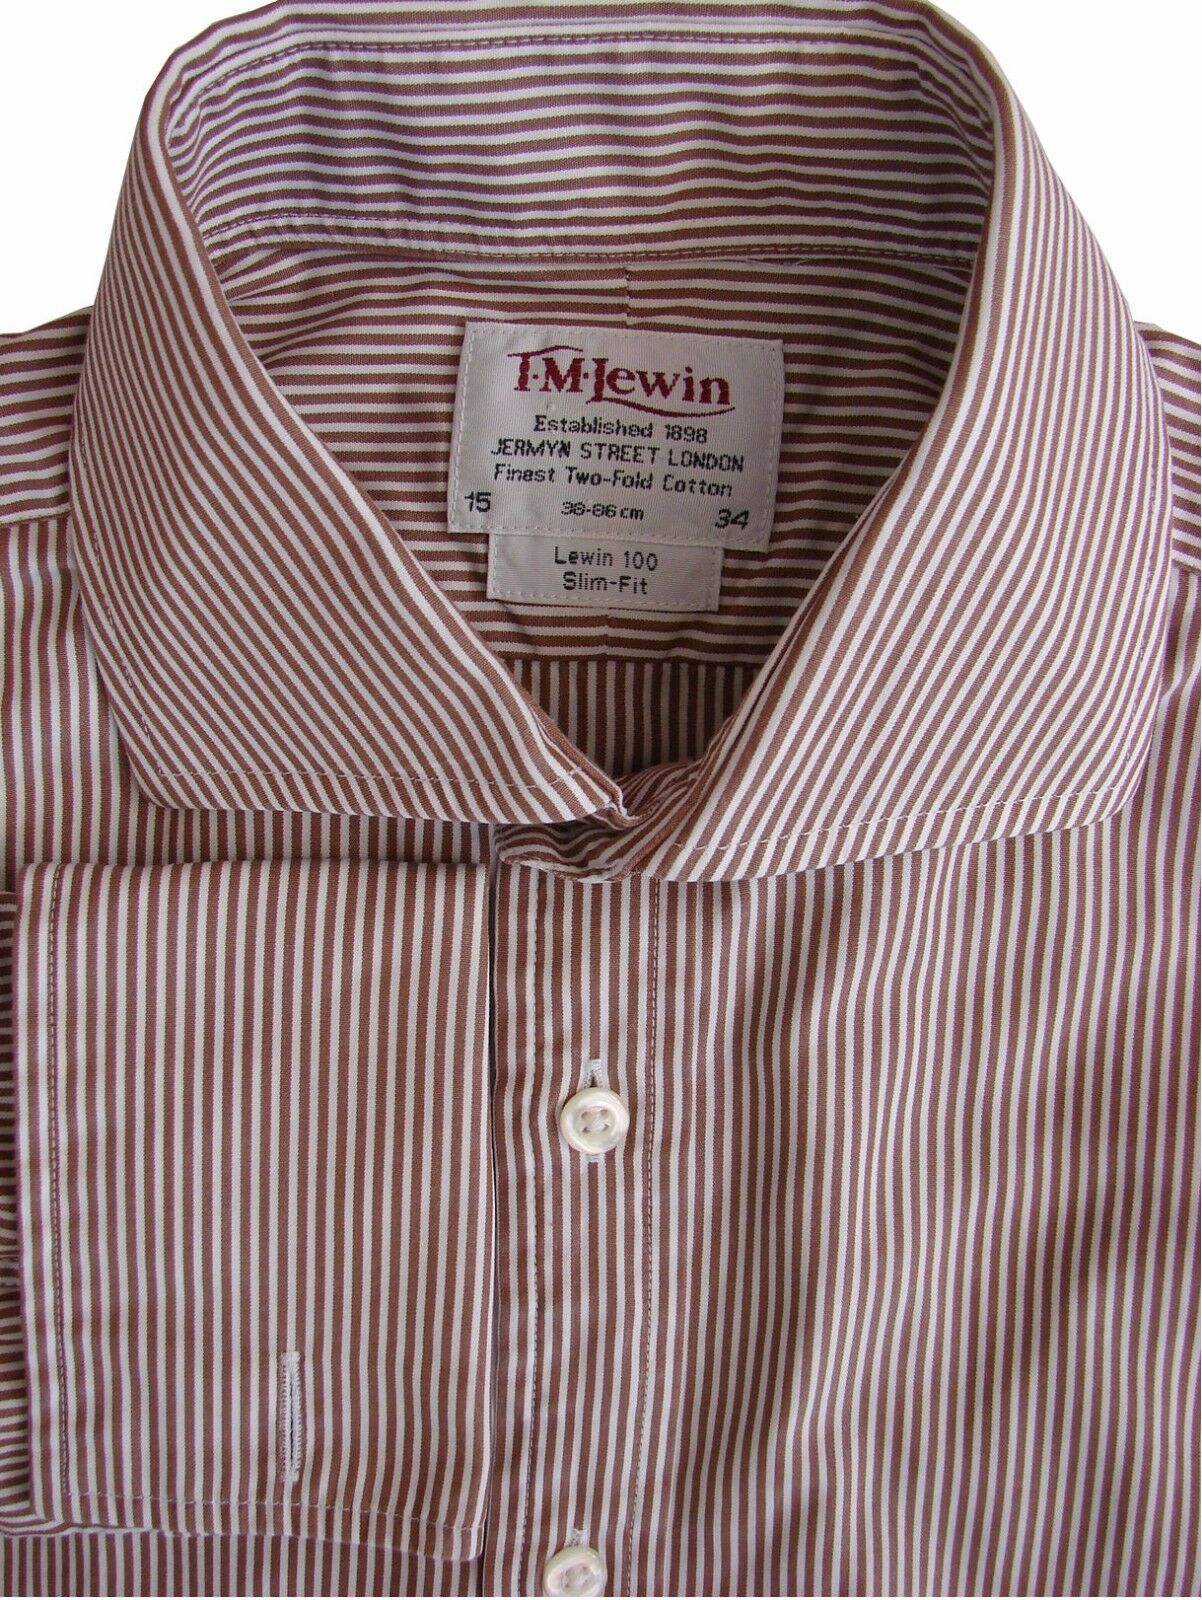 TM LEWIN 100 Shirt Mens 15 S Brown & White Stripes SLIM FIT NEW